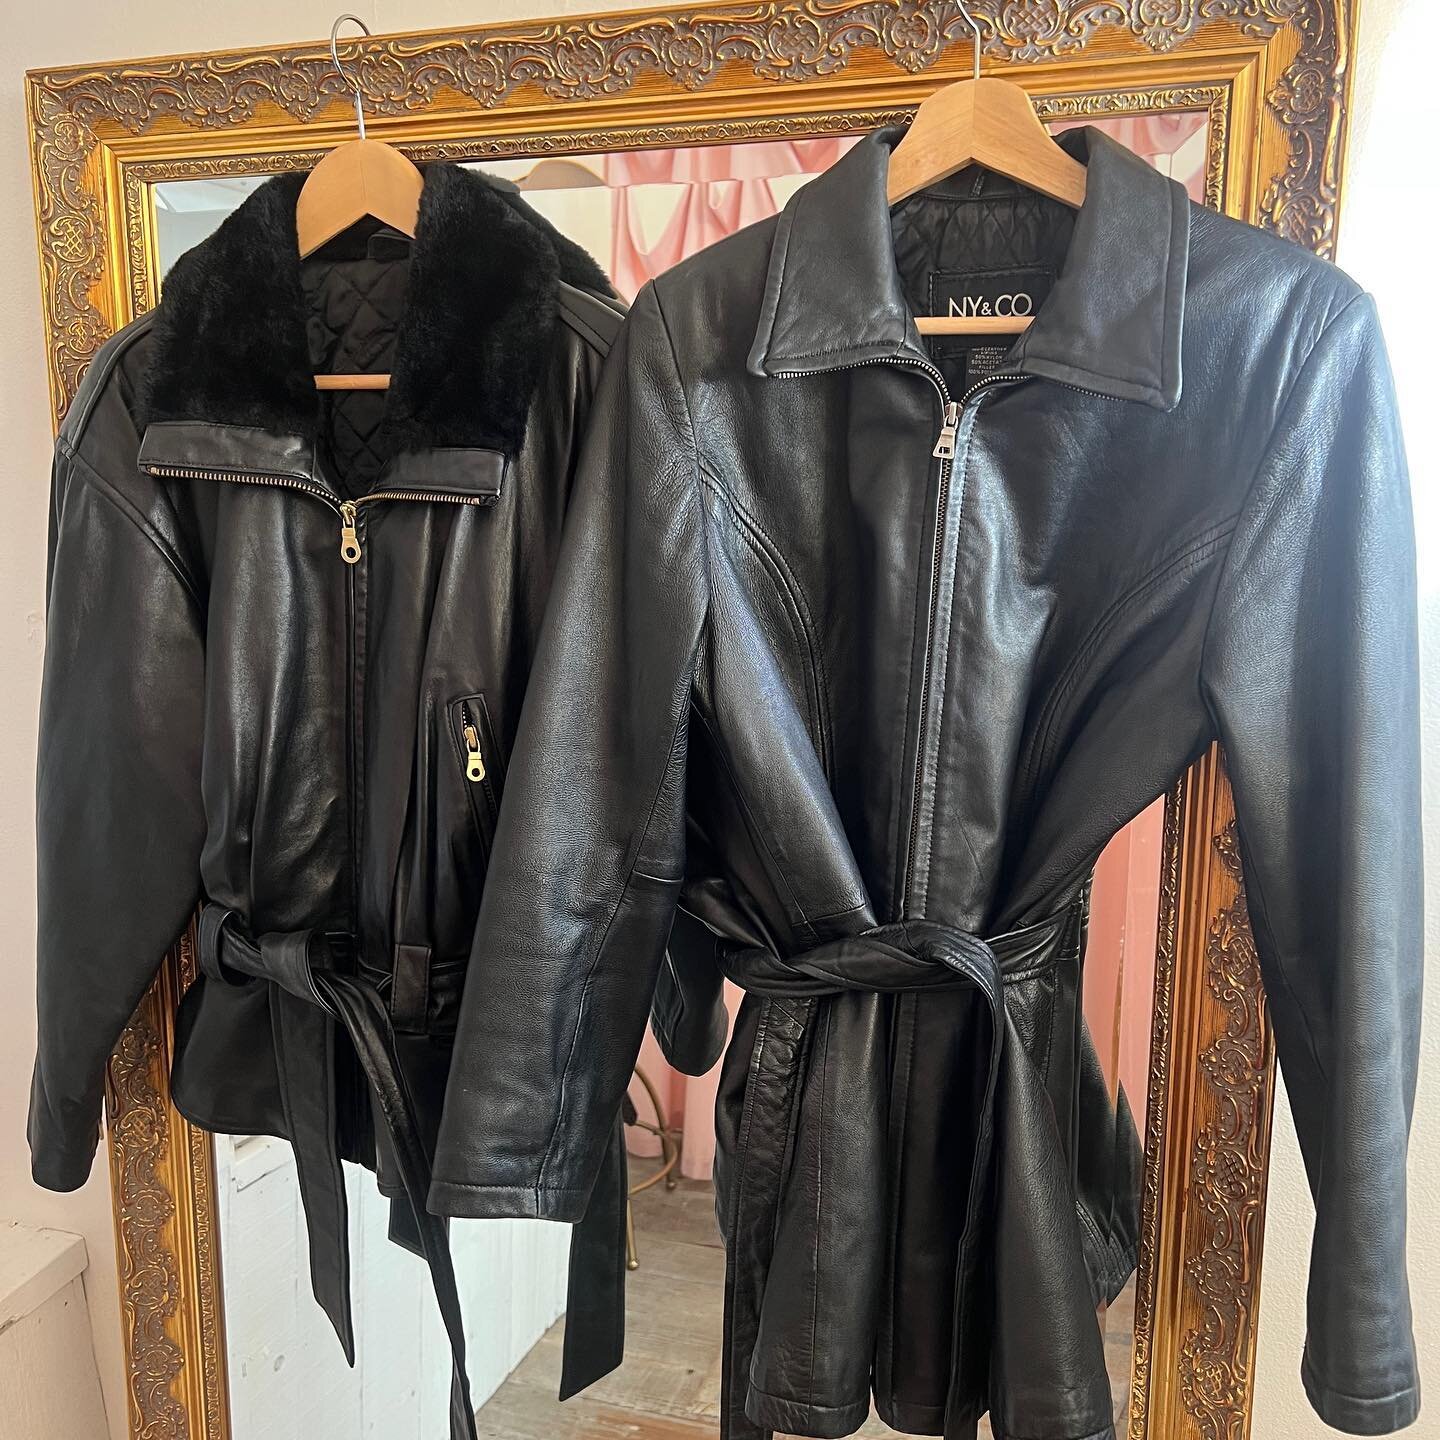 Our staple, vintage coats. #CremeDeLaSoul

&mdash;LEFT: SOLD
&mdash;RIGHT: $120